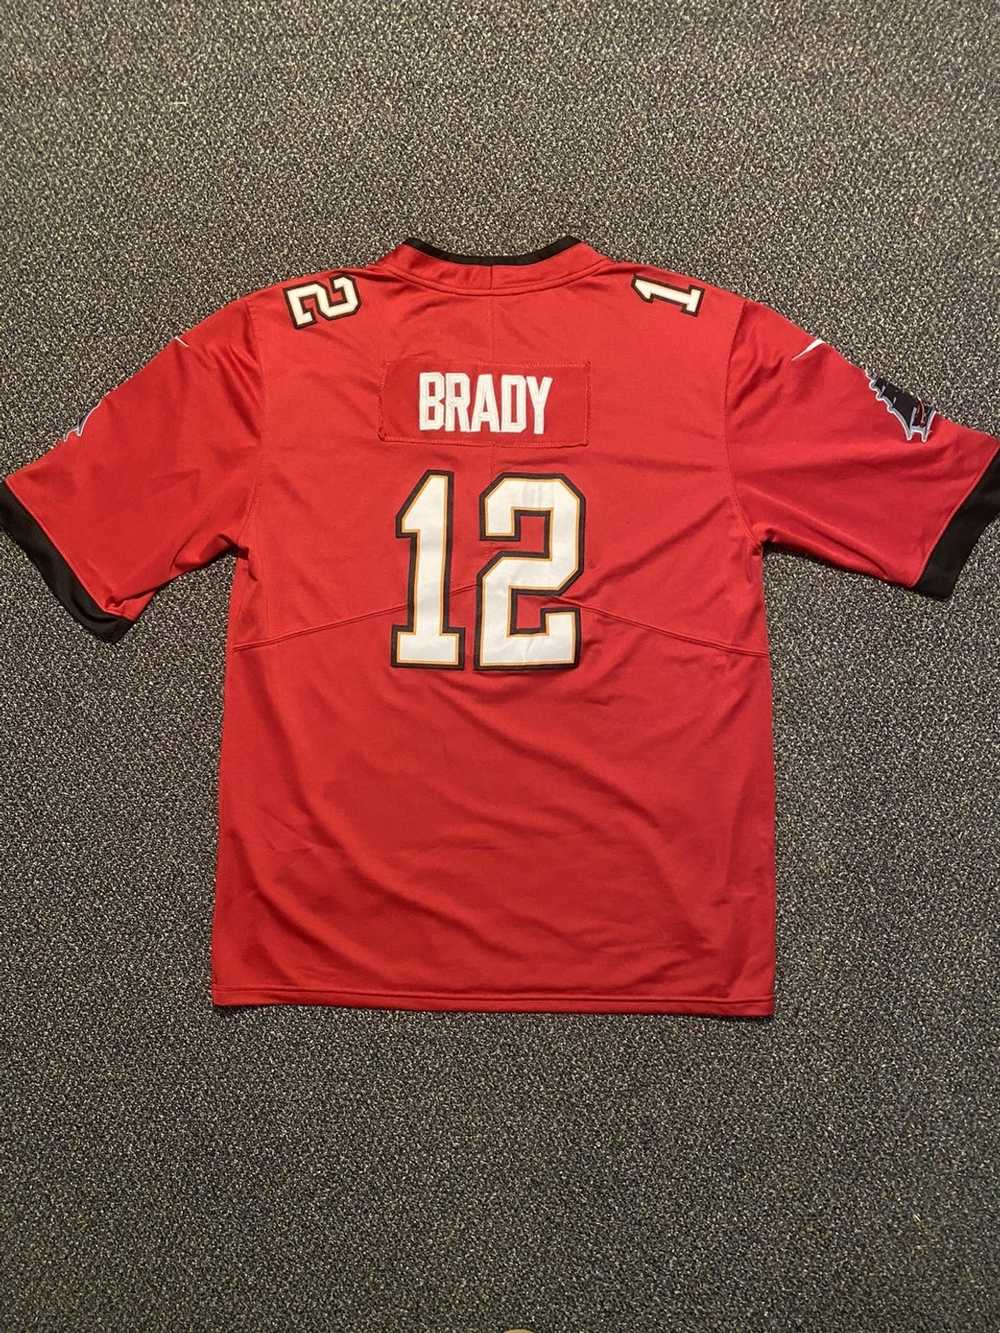 NFL × Nike Tom Brady Buccaneers Jersey - image 4